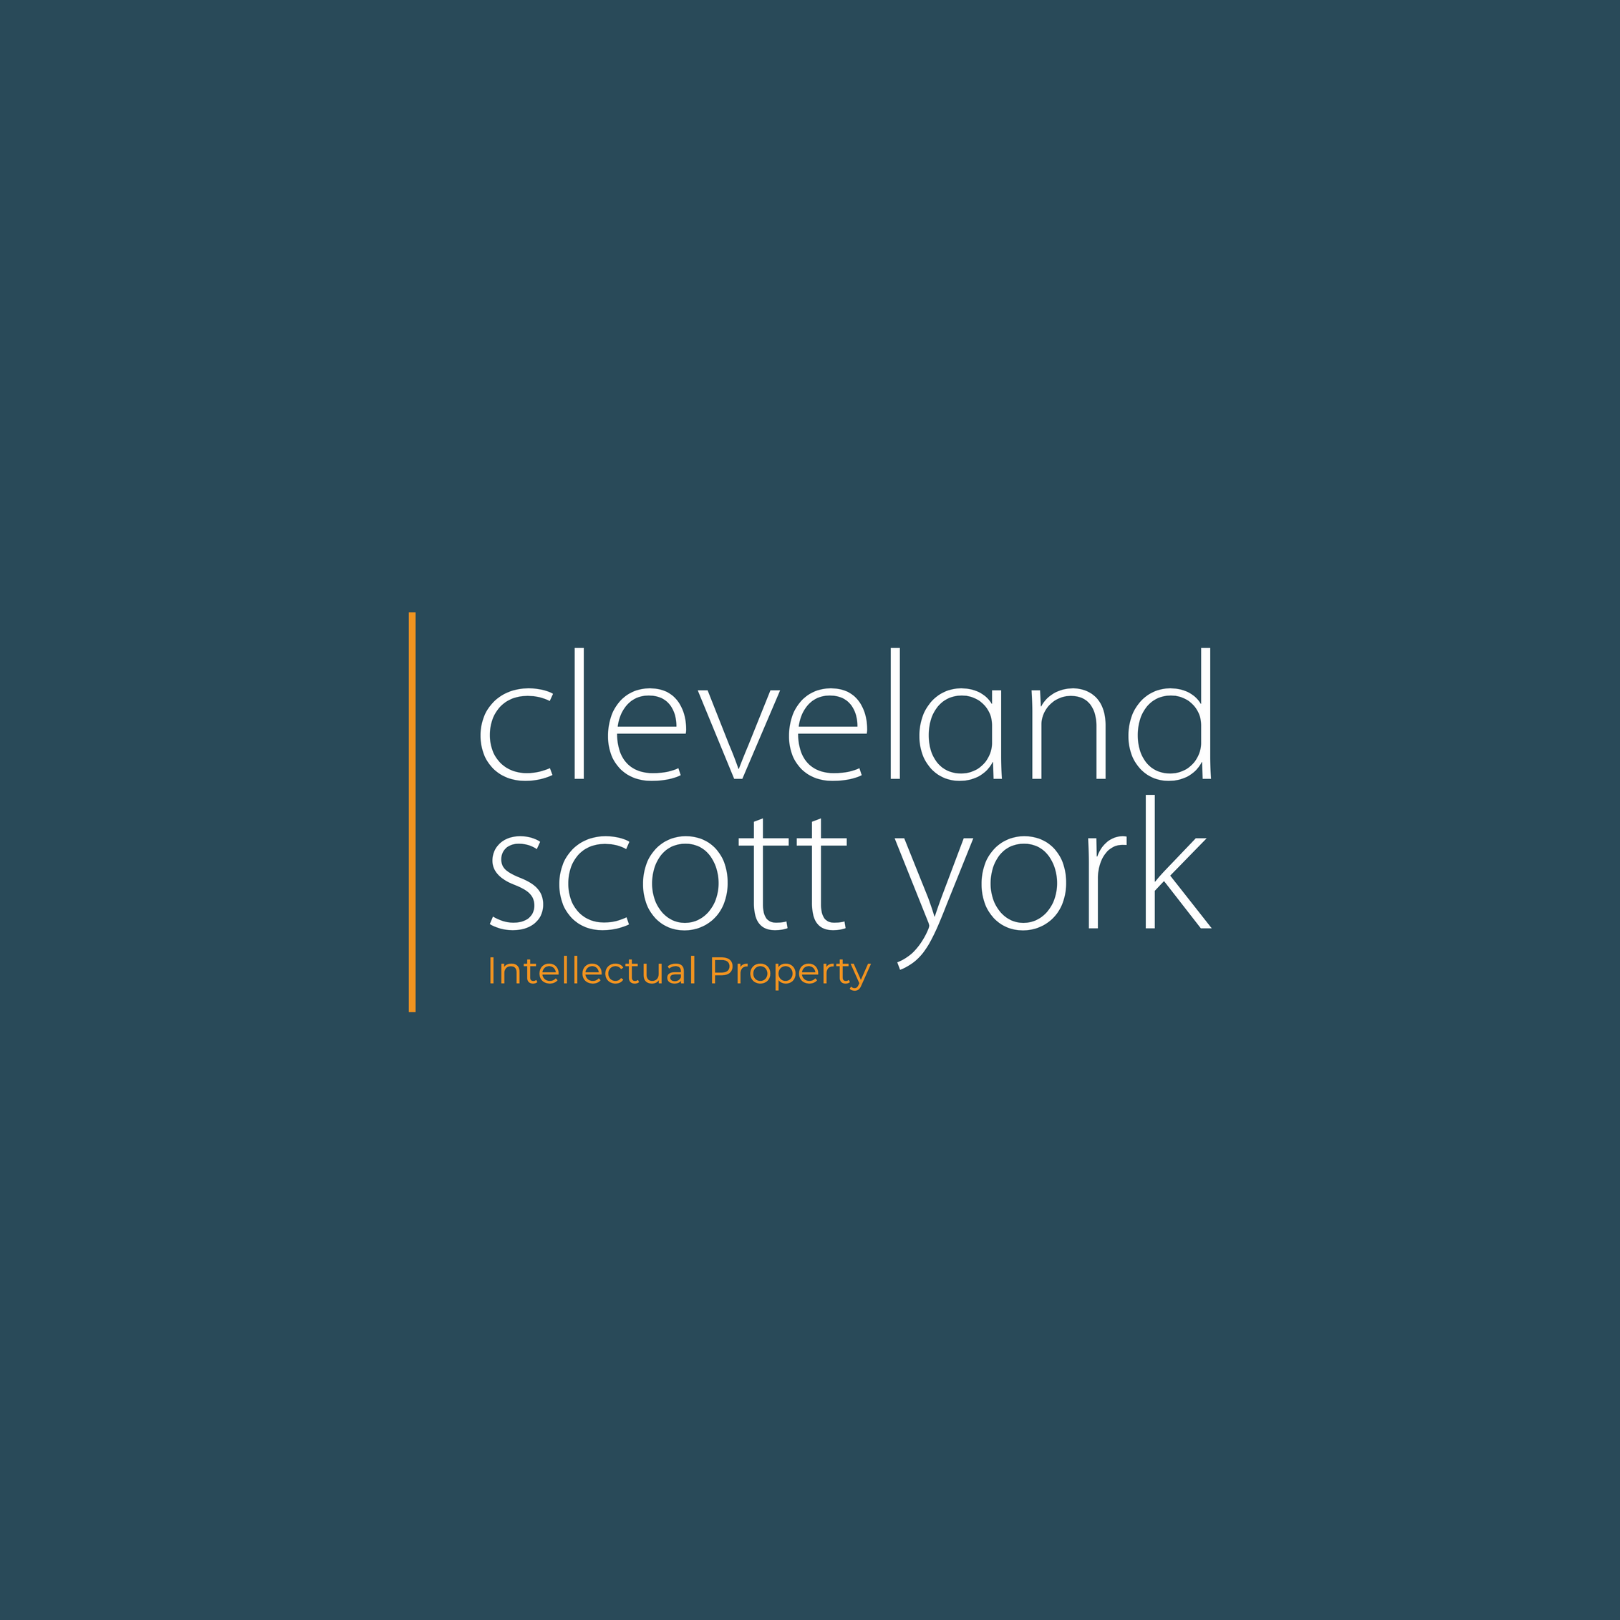 Cleveland Scott York